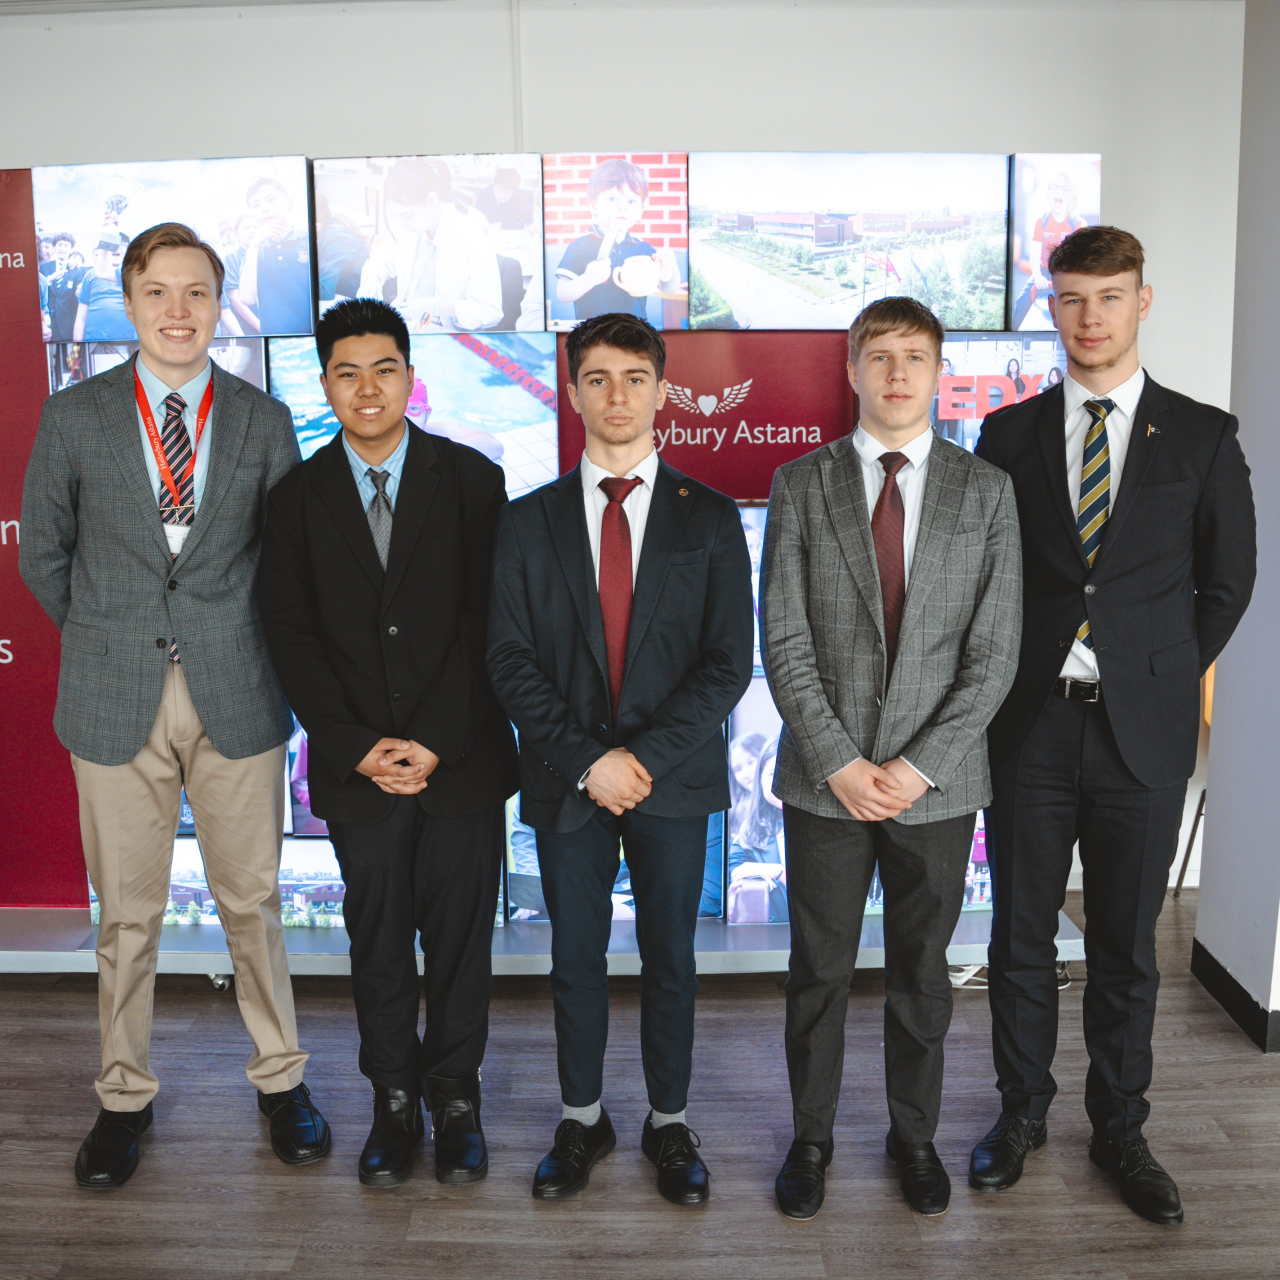 Haileybury Astana Hosts Student-Led Innovation Event: "Shark Tank" Simulation